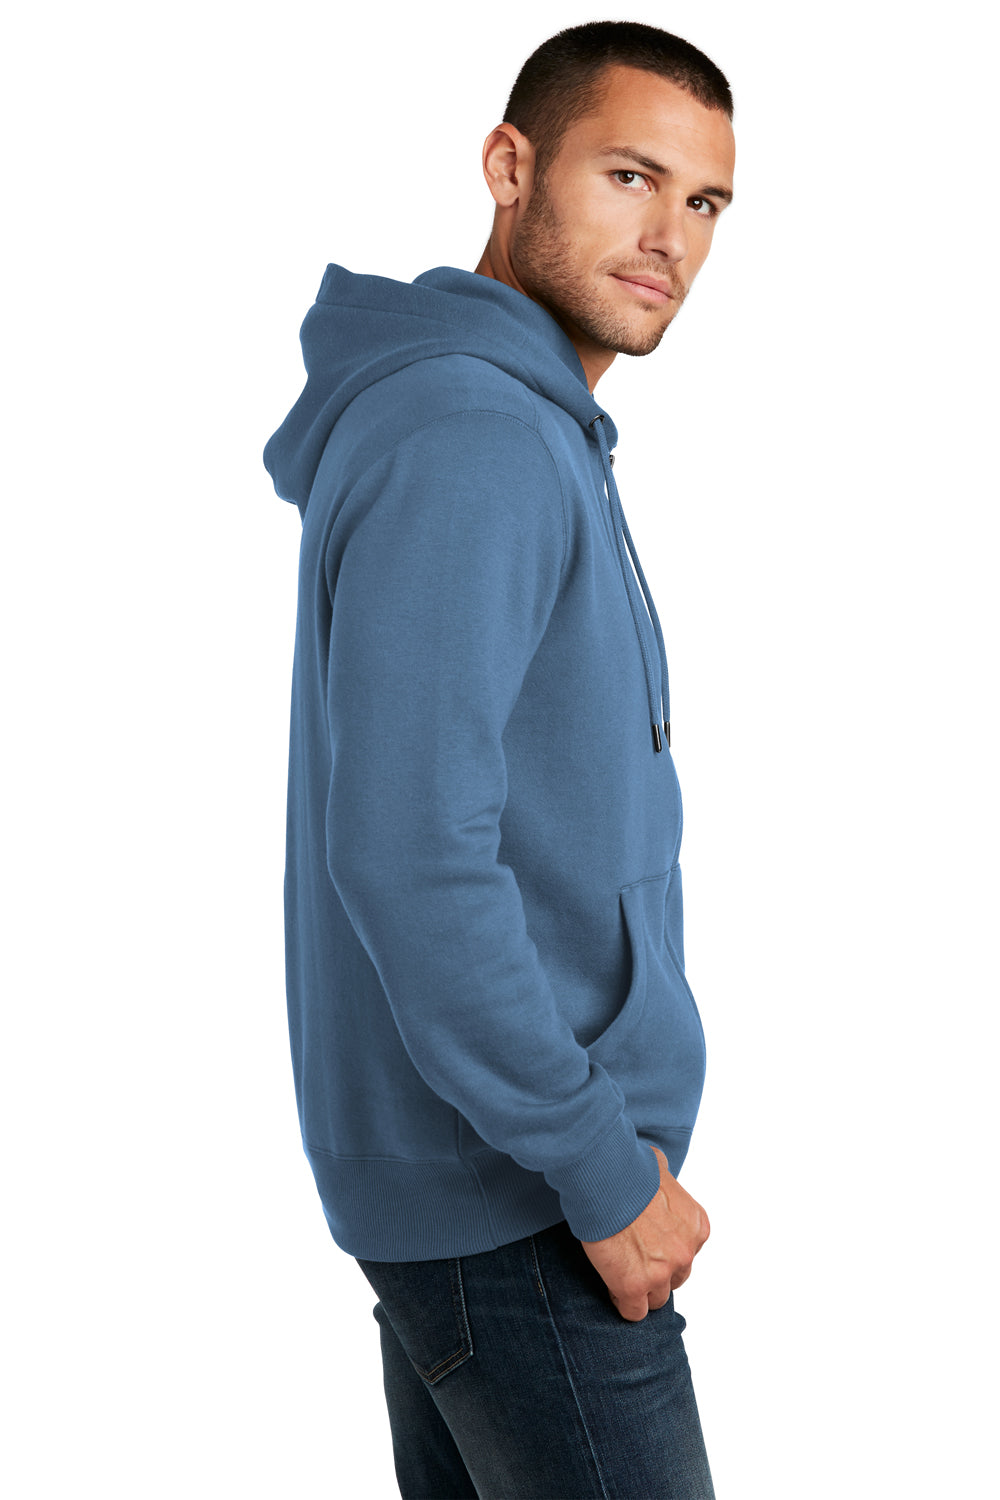 District Mens Perfect Weight Fleece Full Zip Hooded Sweatshirt Hoodie Maritime Blue Side